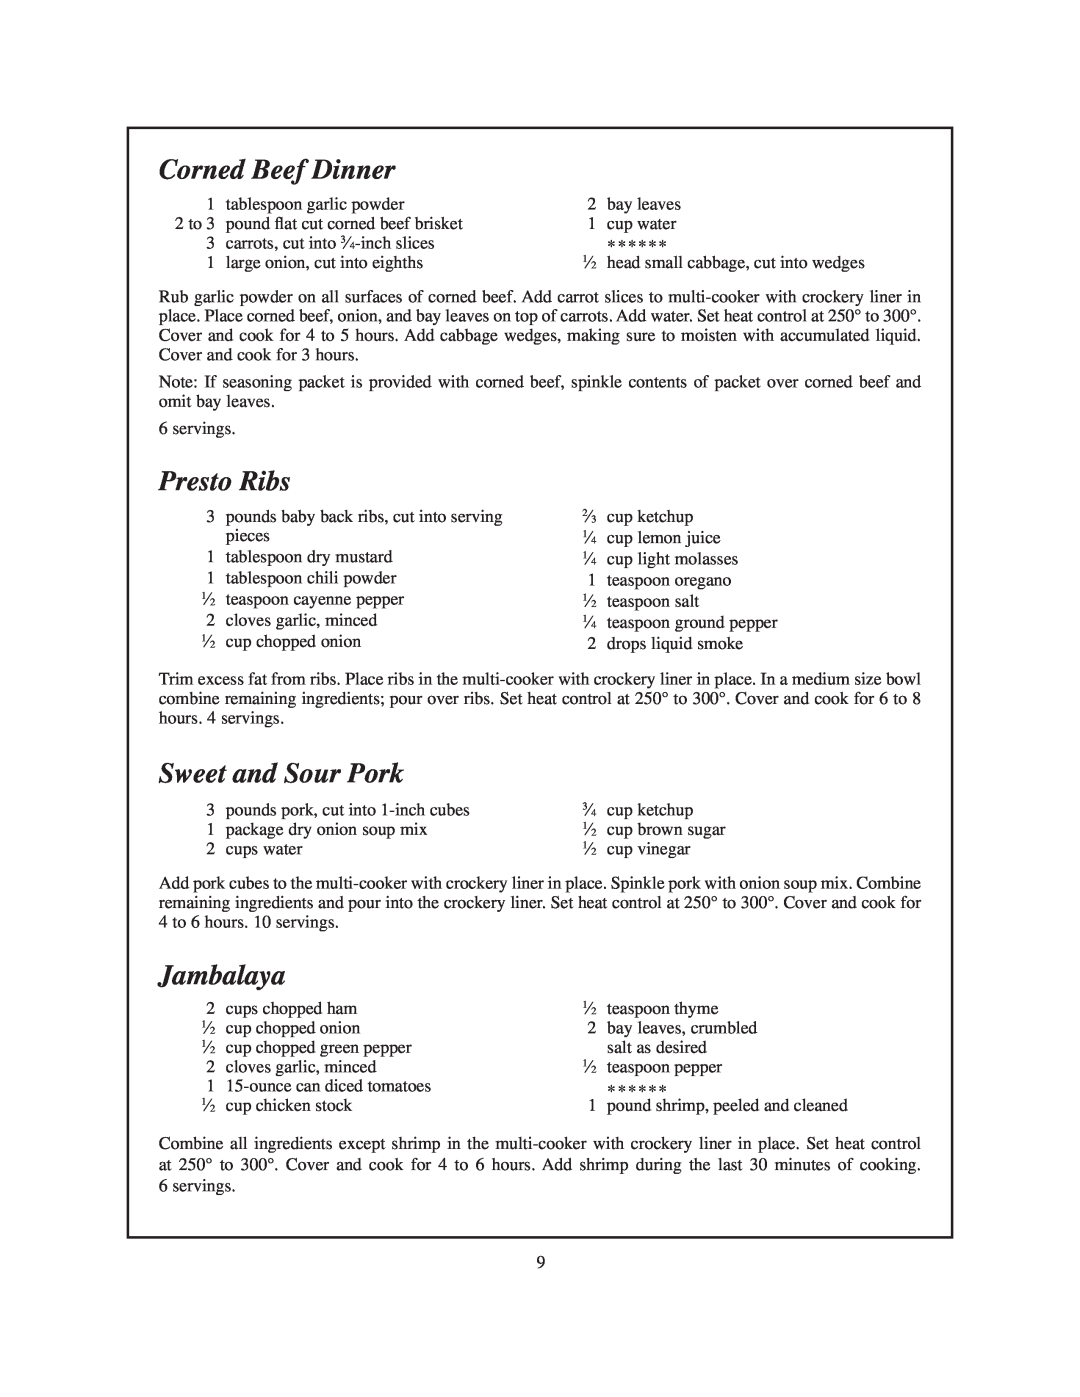 Presto Electric multi-cooker manual Corned Beef Dinner, Presto Ribs, Sweet and Sour Pork, Jambalaya, cup brown sugar 